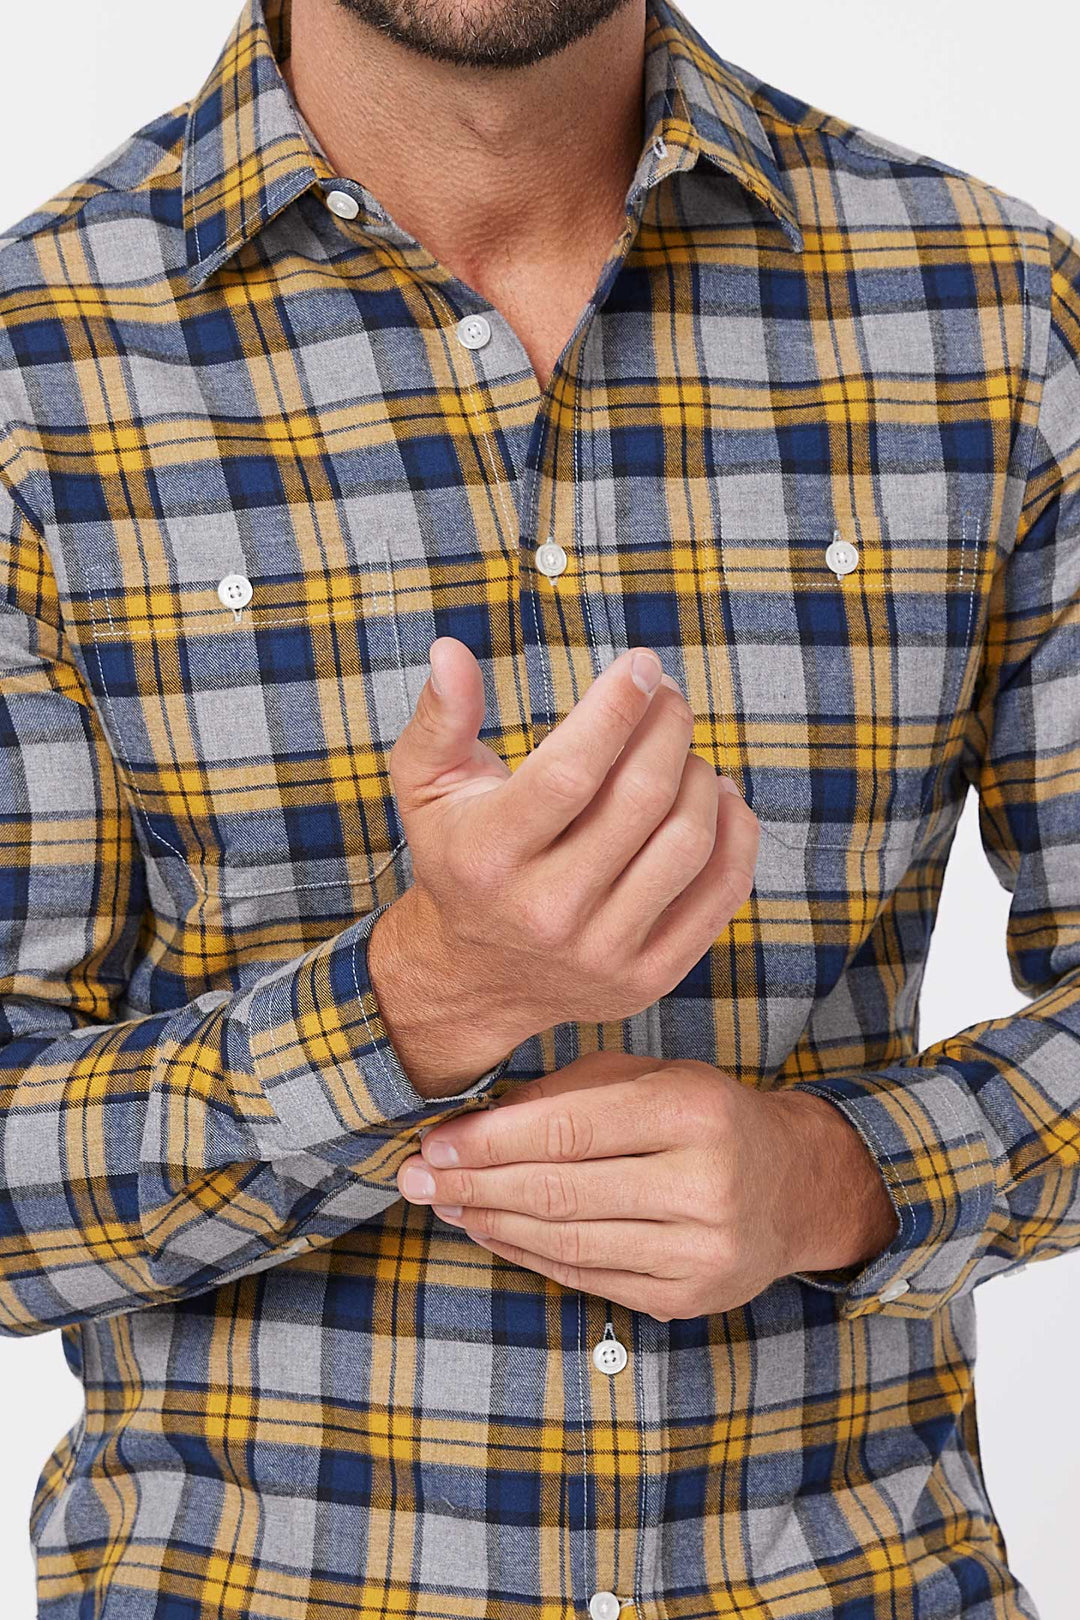 Buy Vintage Navy Flannel Button-Down Shirt for Short Men | Ash & Erie   Flannel Everyday Shirt